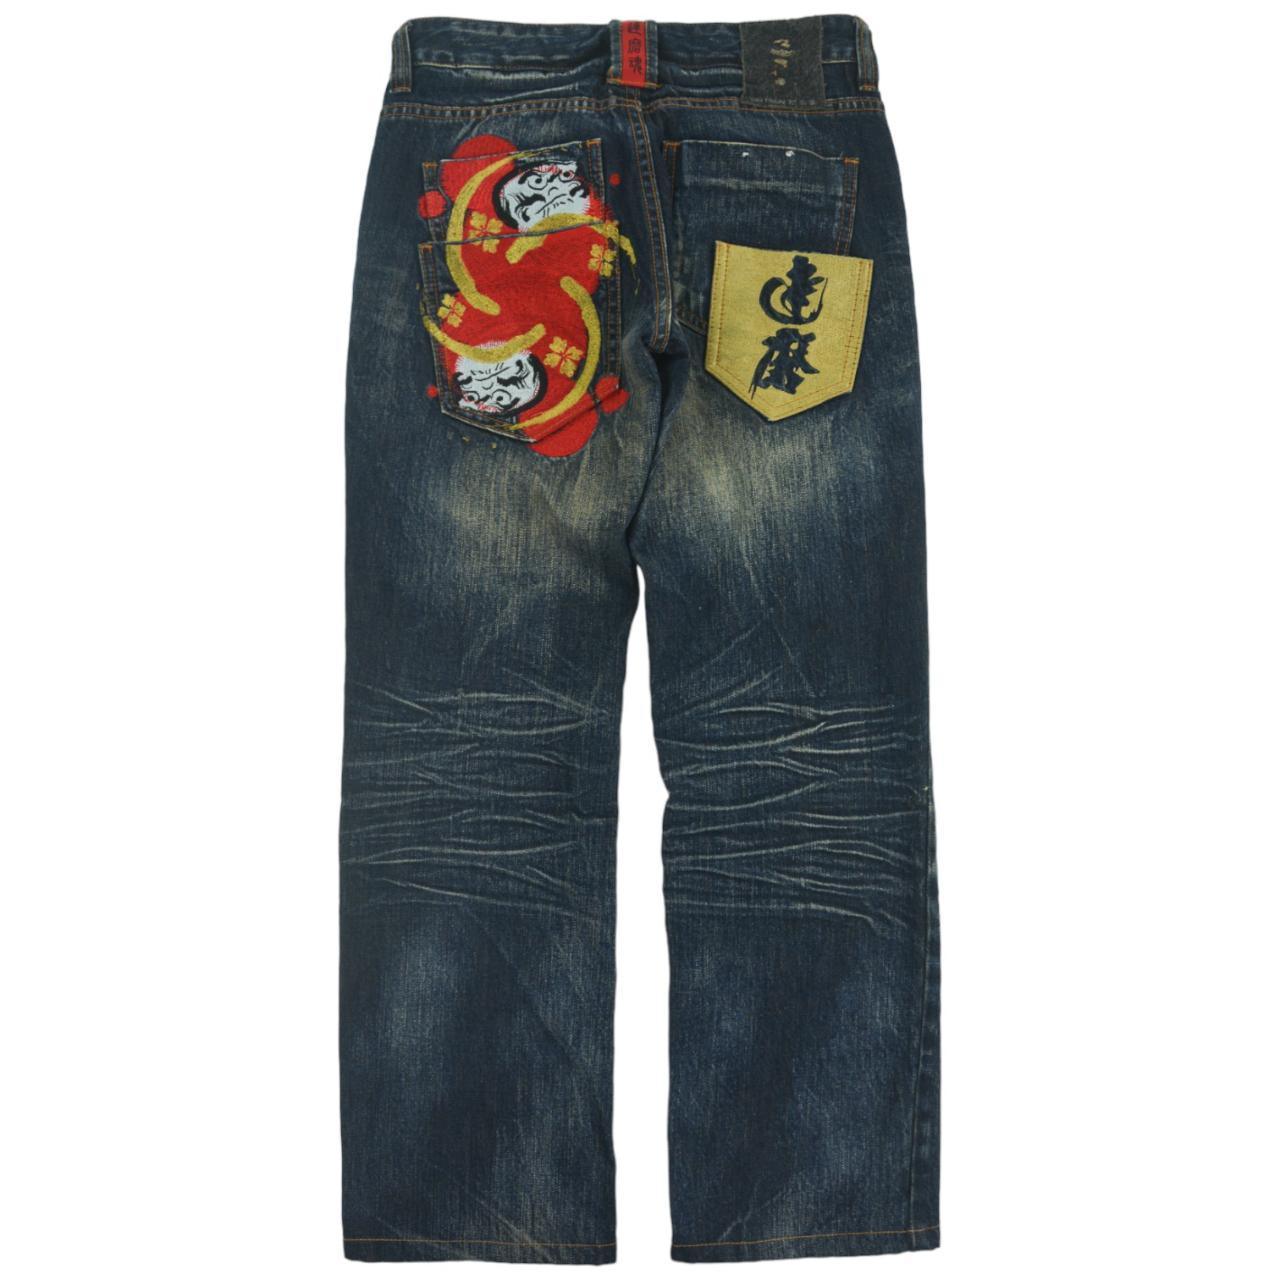 Vintage Big Train Japanese Denim Jeans Size W29 - Known Source